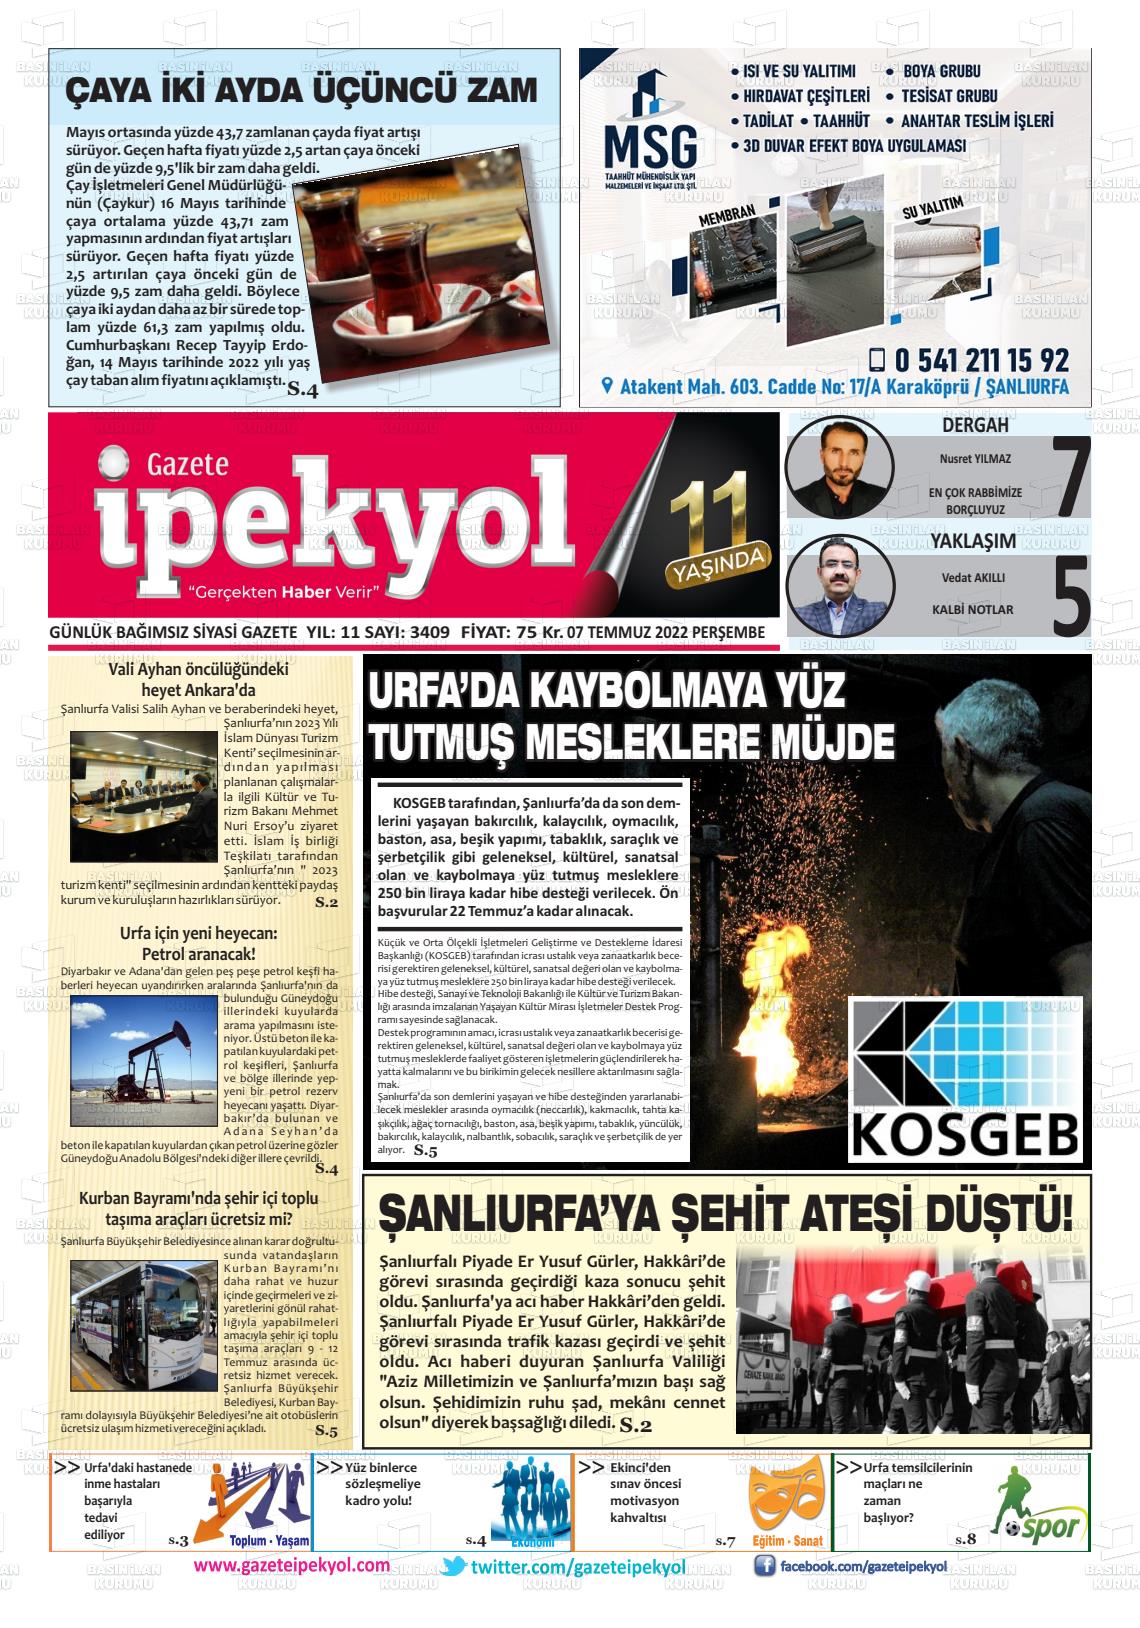 07 Temmuz 2022 Gazete İpekyol Gazete Manşeti